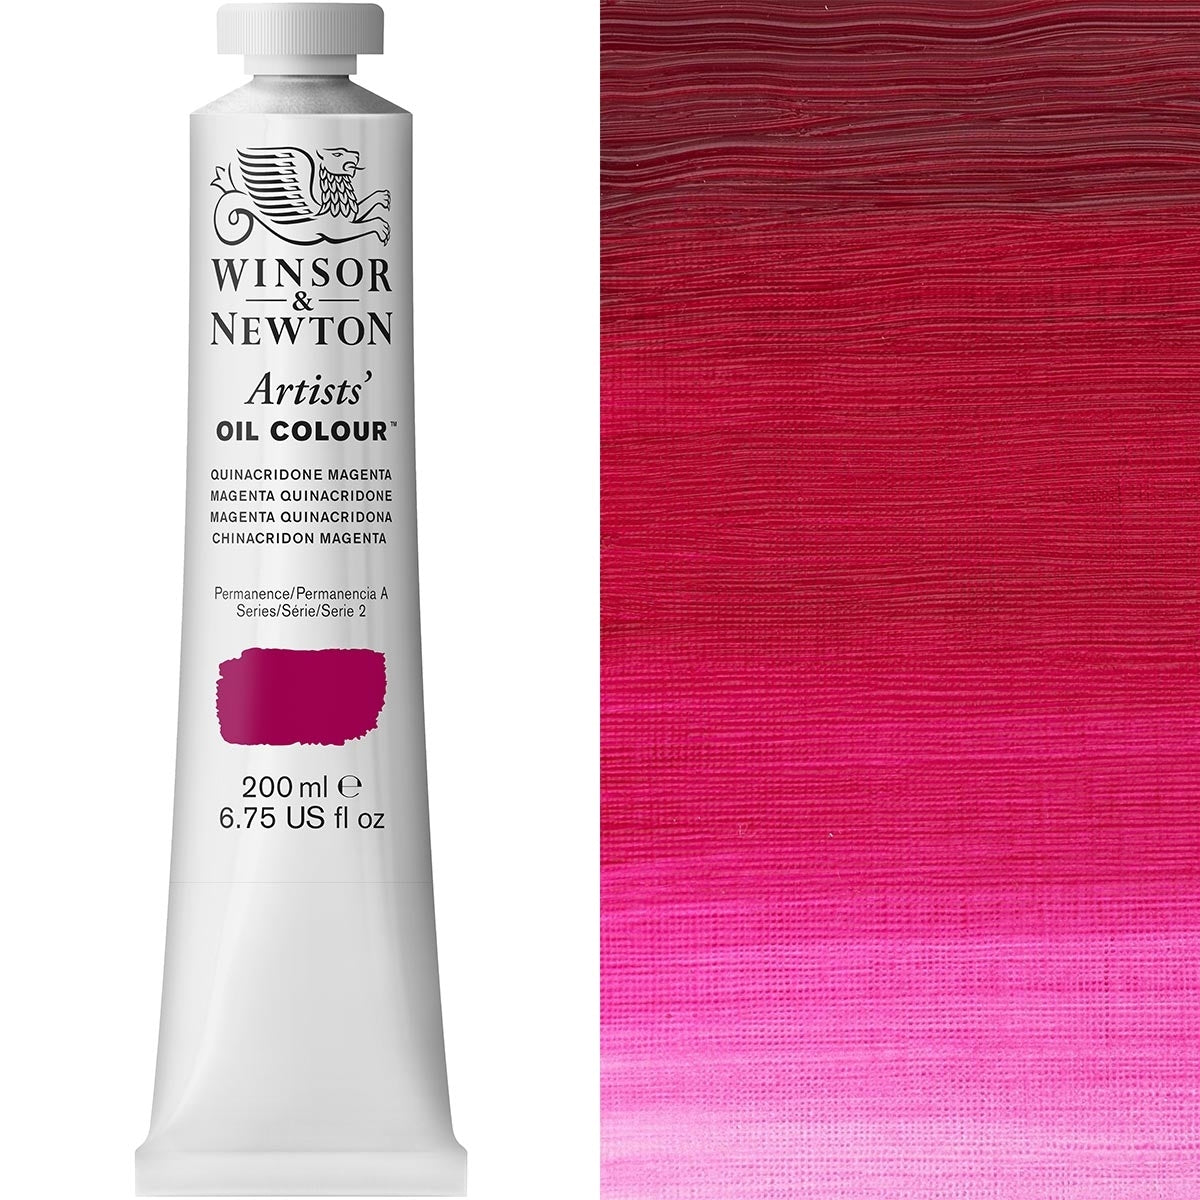 Winsor and Newton - Artists' Oil Colour - 200ml - Quinacridone Magenta